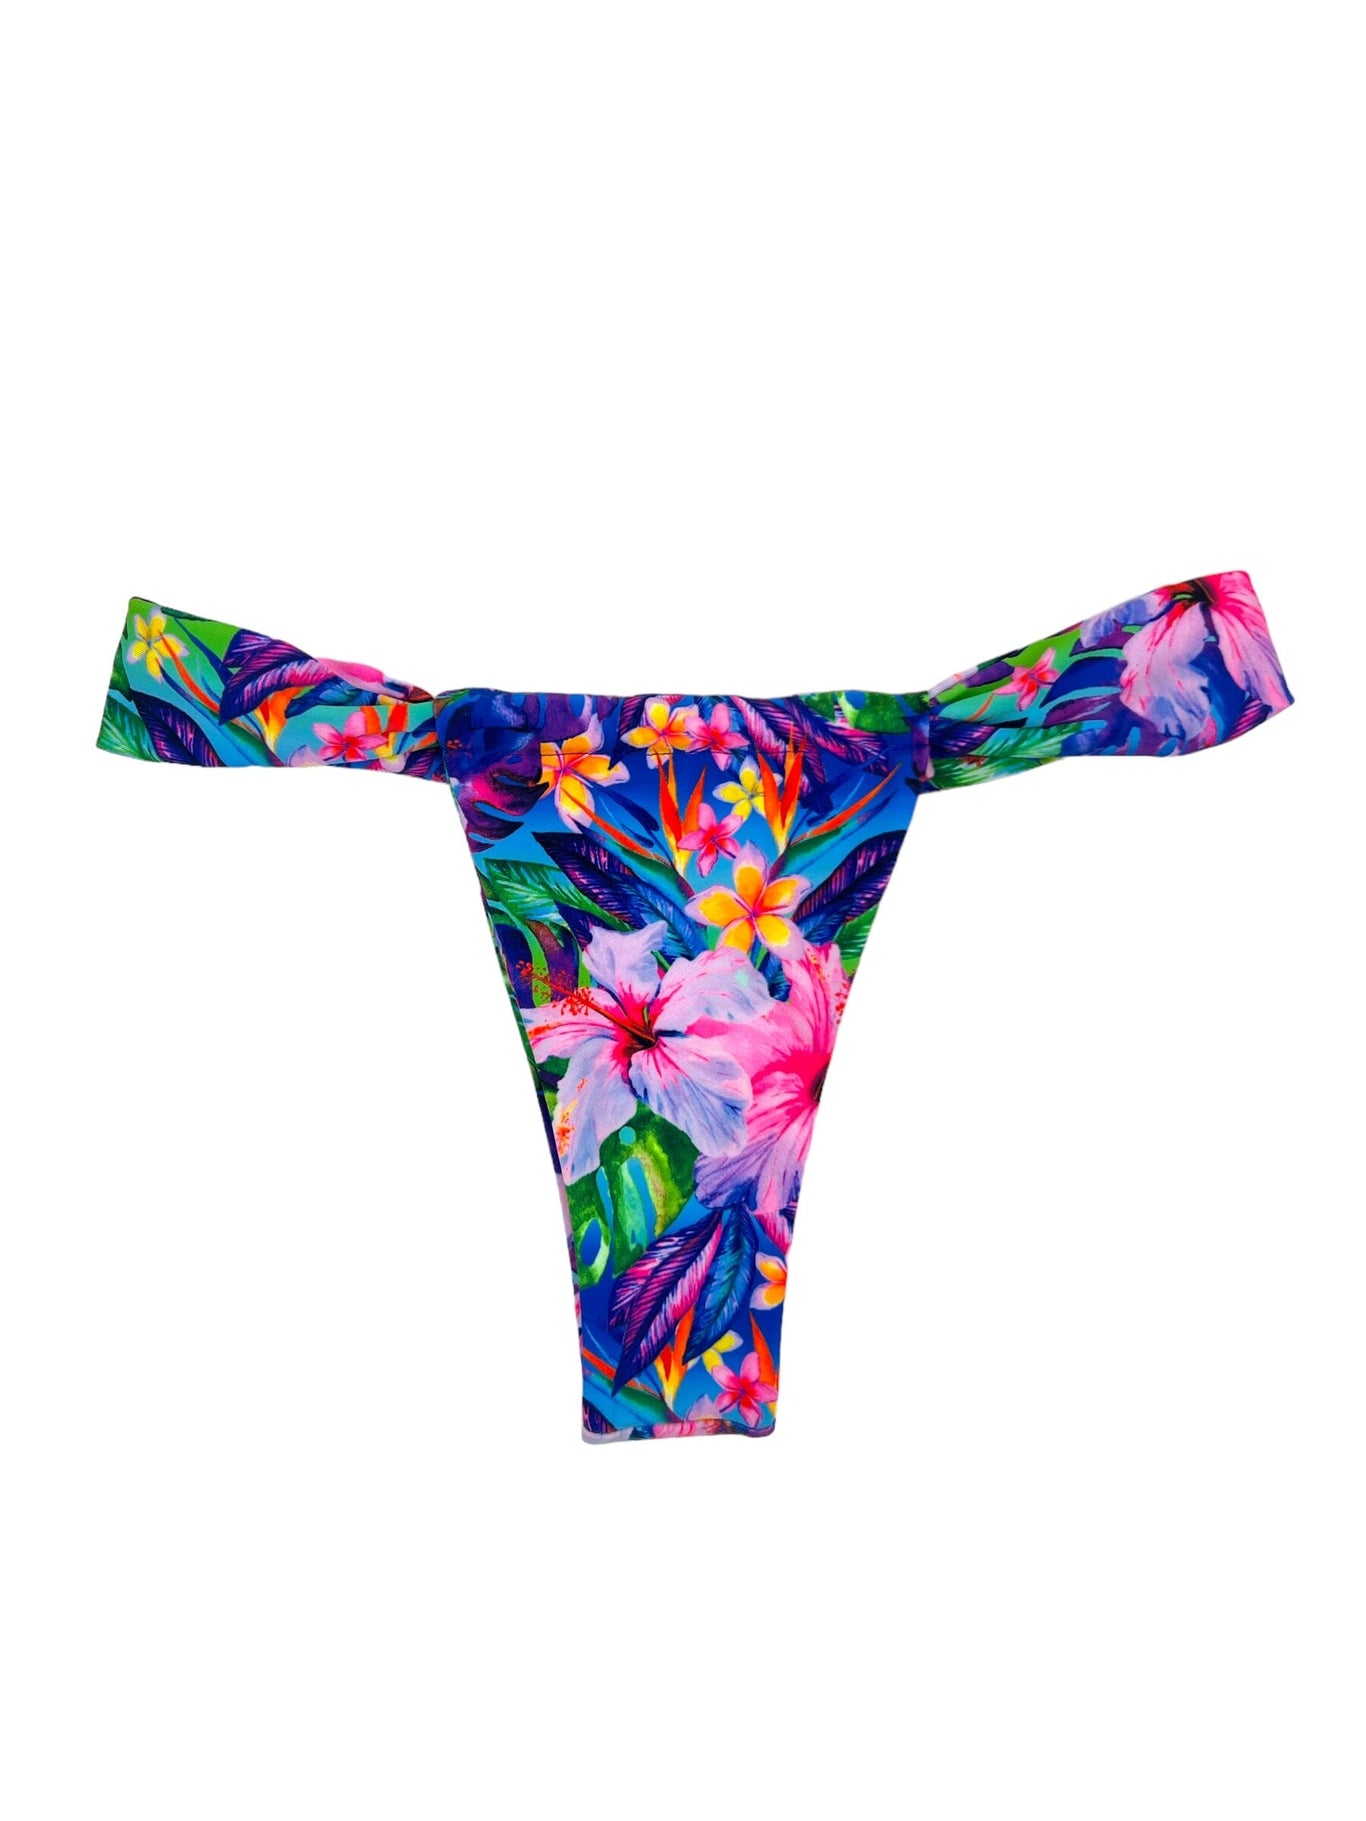 TROPICANA BLISS VINTAGE SLIDE BOTTOM - Berry Beachy Swimwear